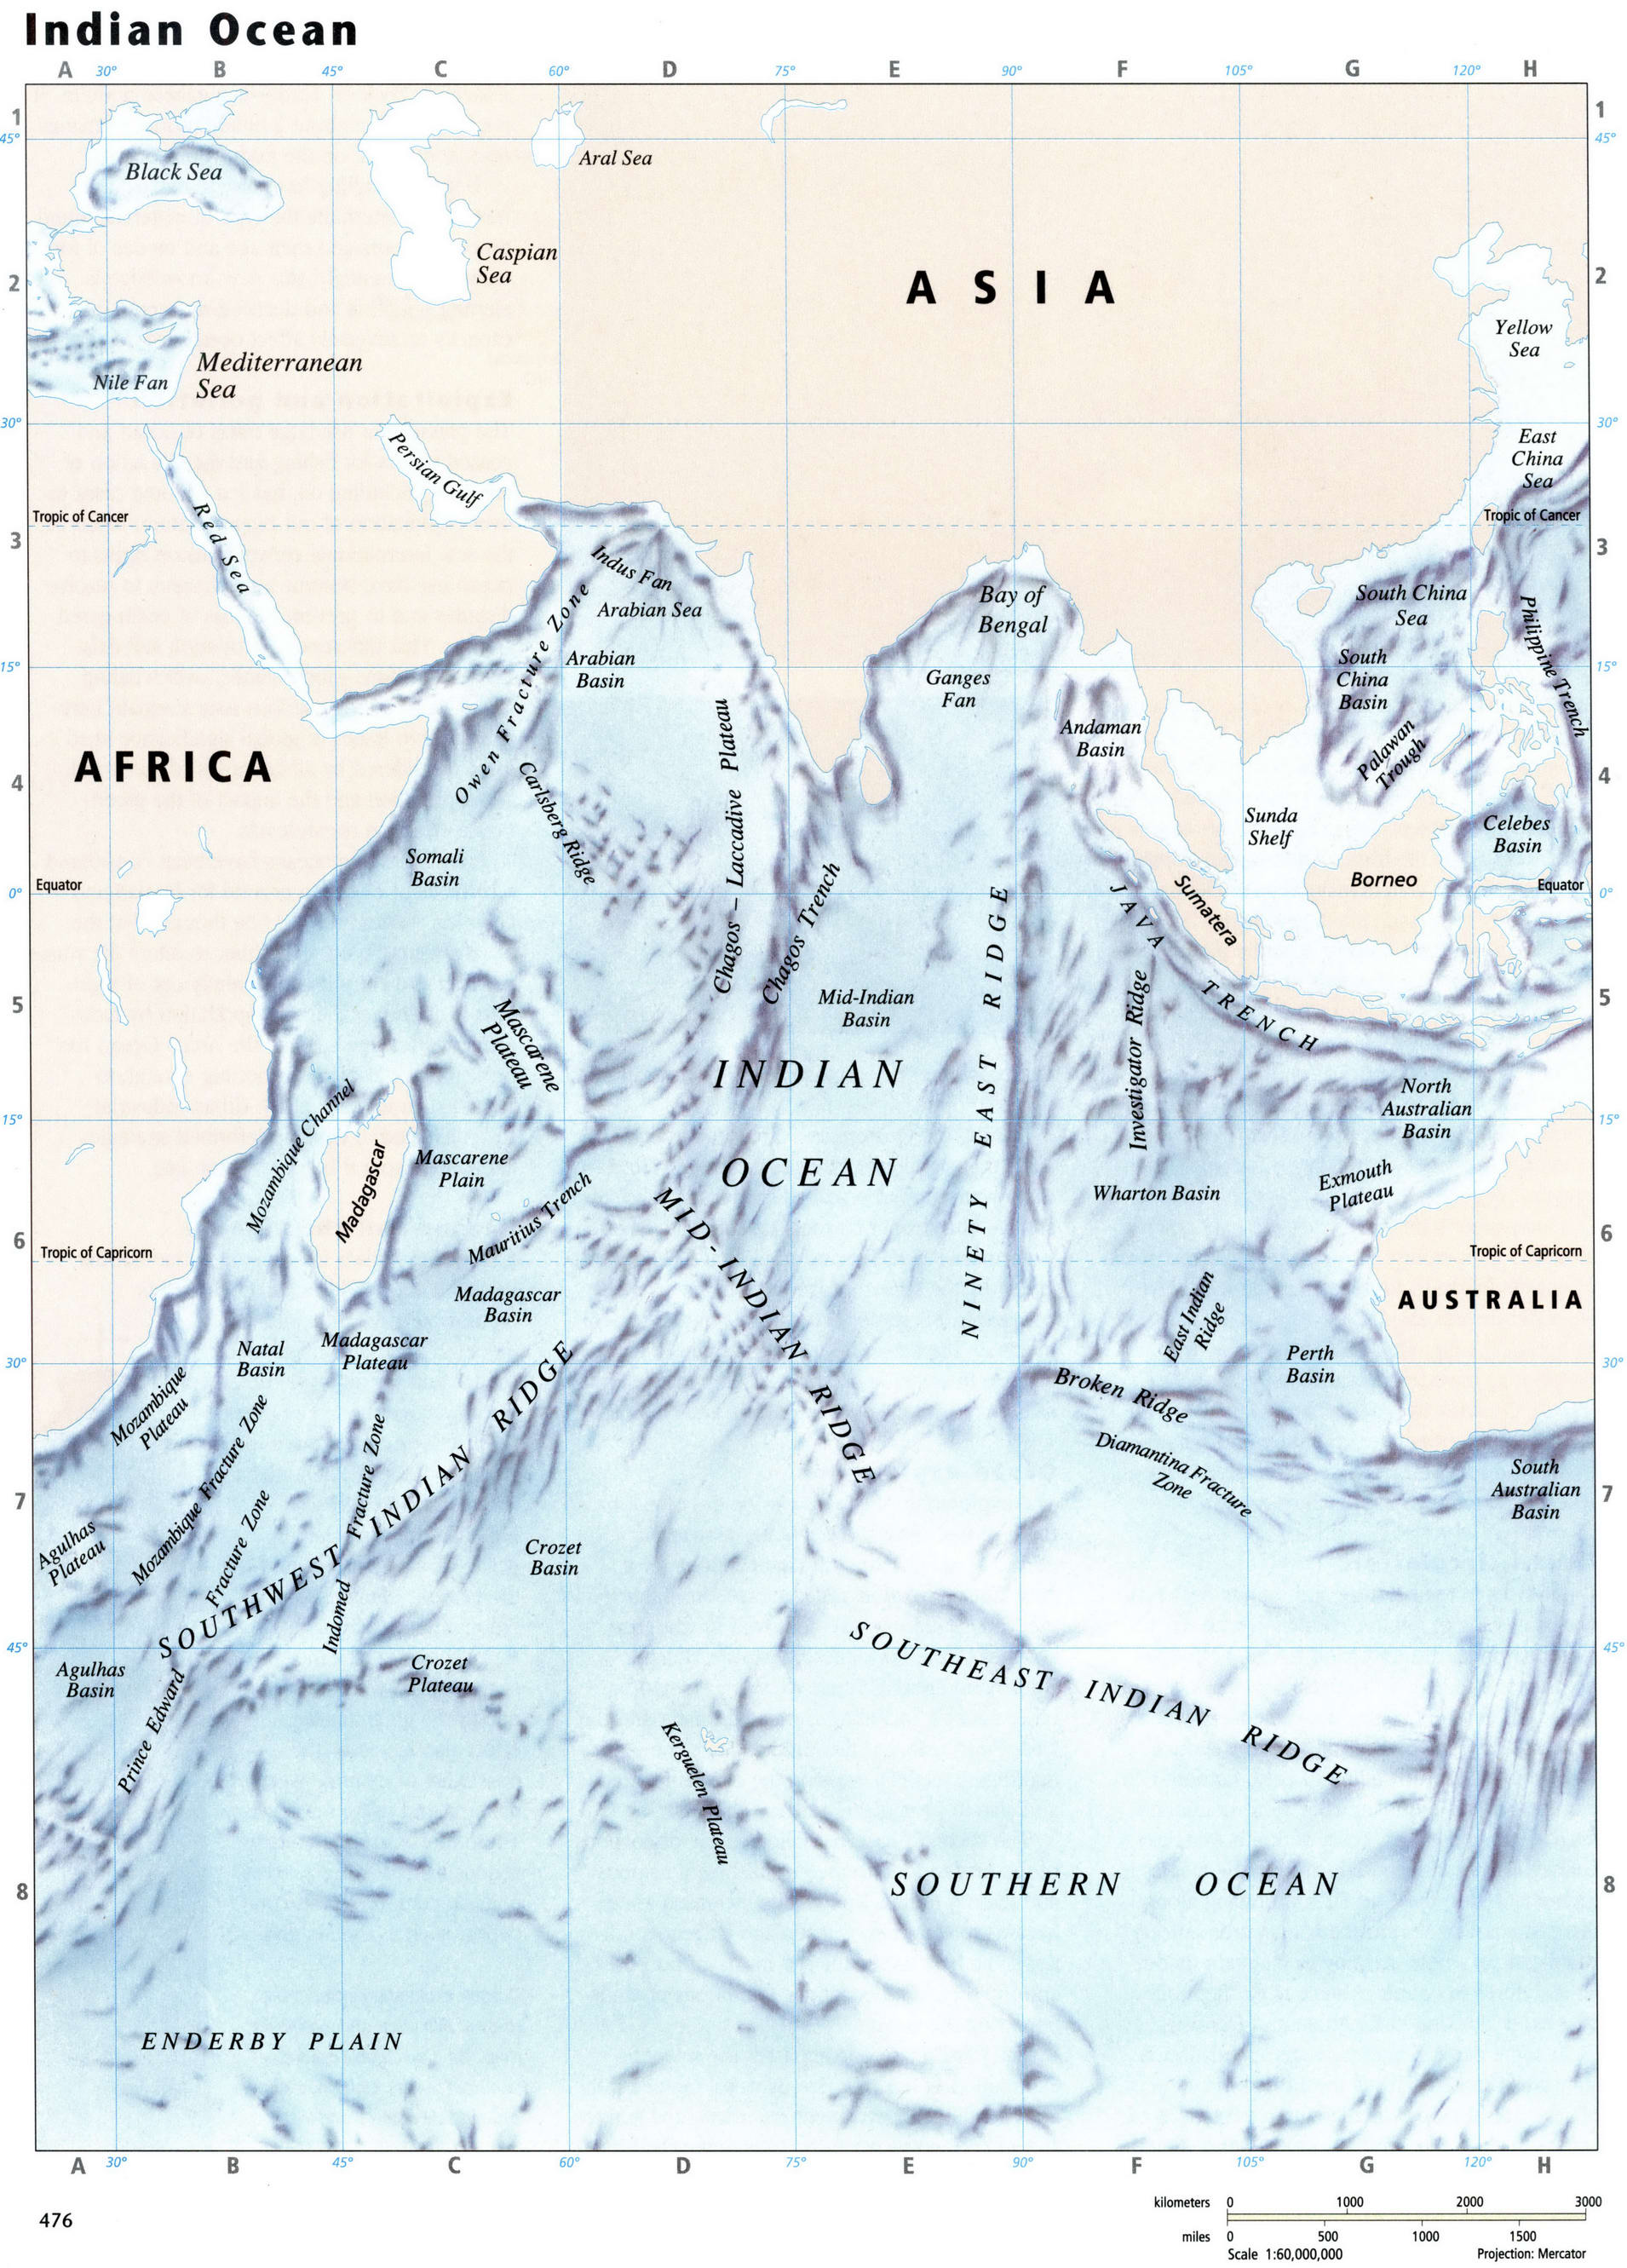 Indian Ocean detailed map